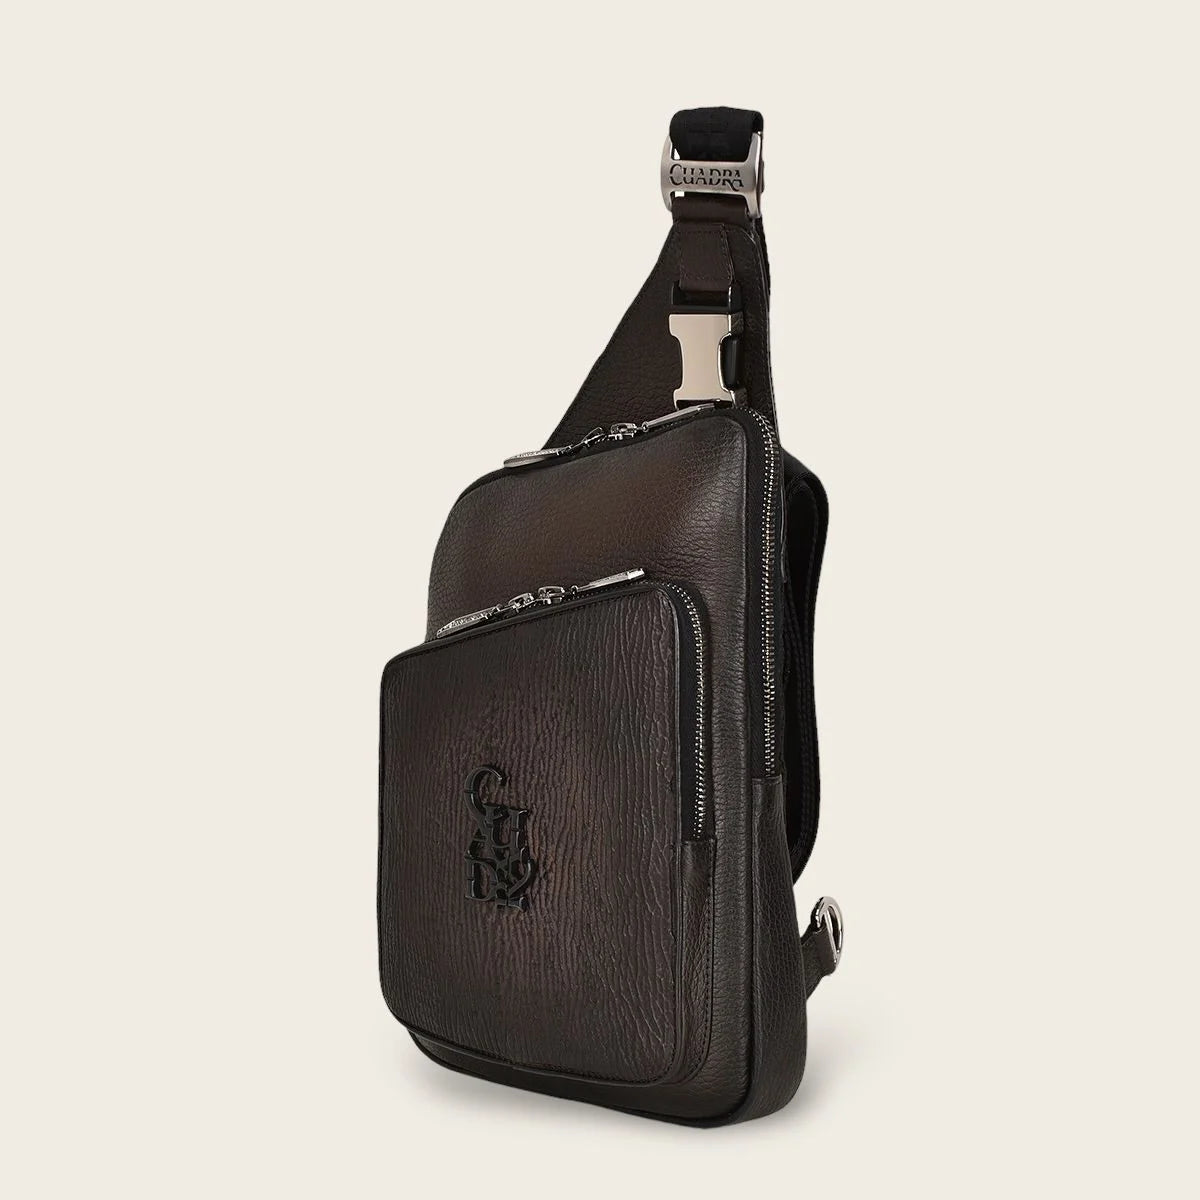 Mens Brown exotic leather shoulder bag - BOC15TI - Cuadra Shop